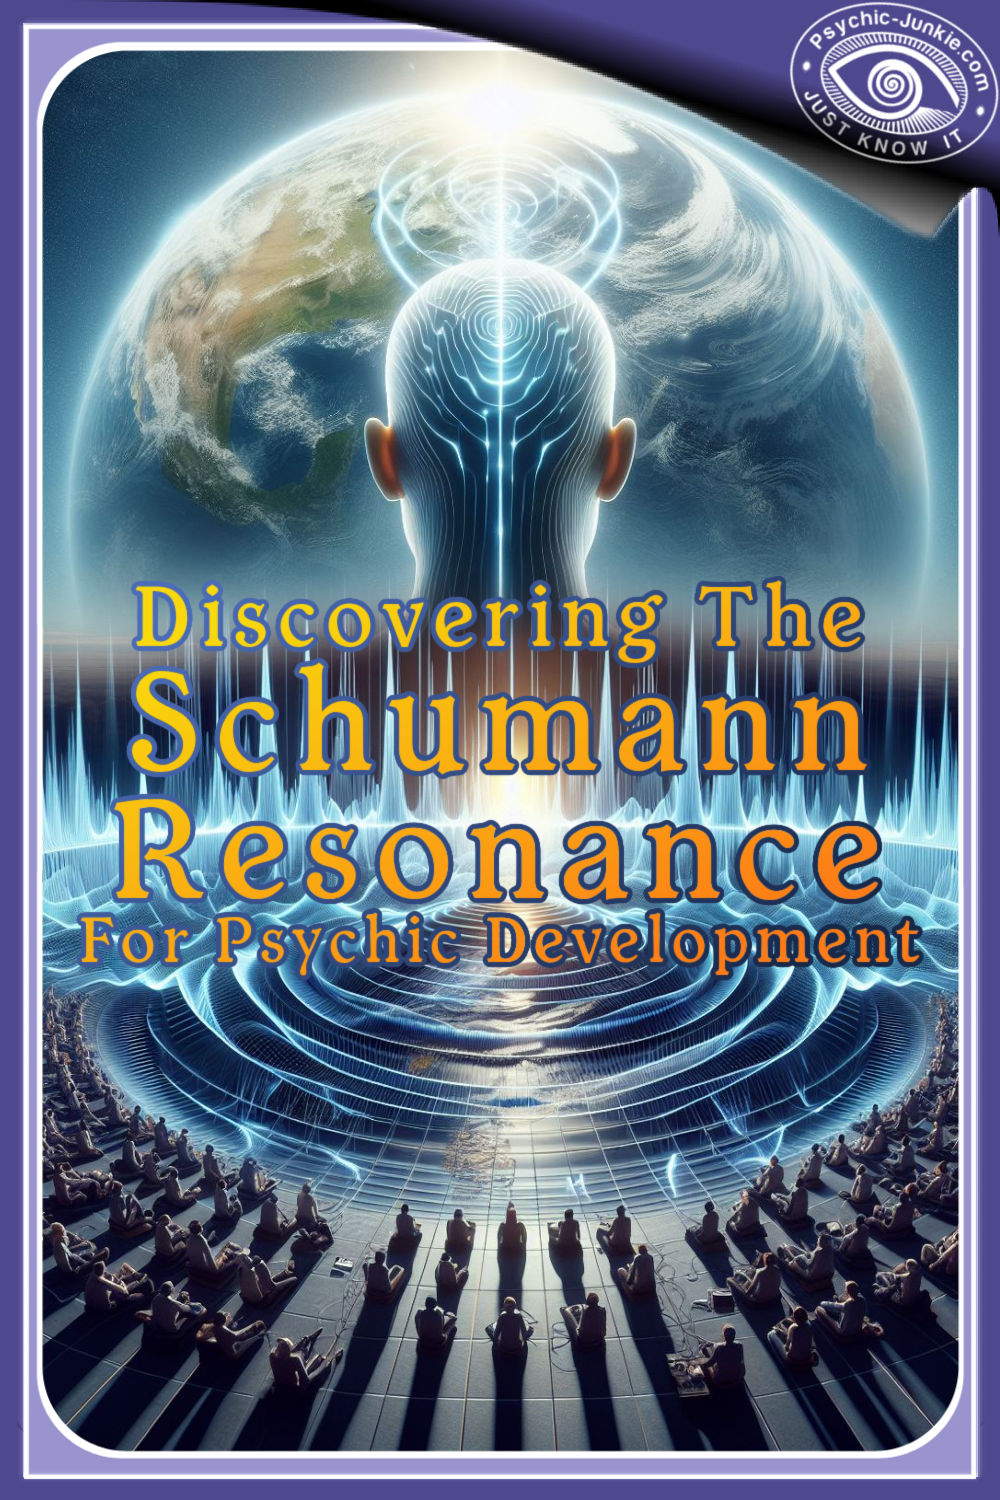 What Is The Schumann Resonance?